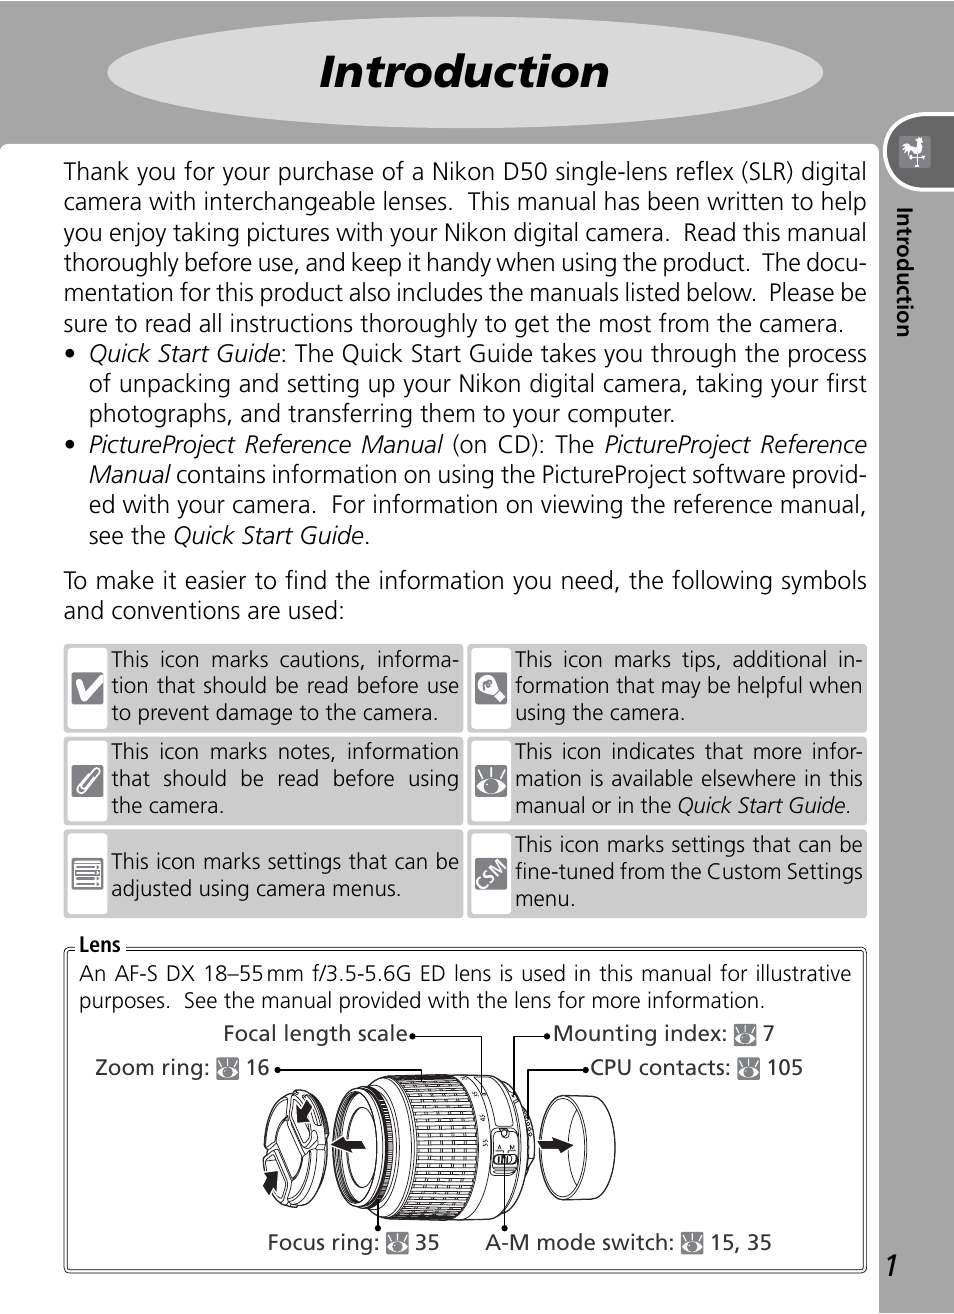 Introduction | Nikon D50 User Manual | Page 11 / 148